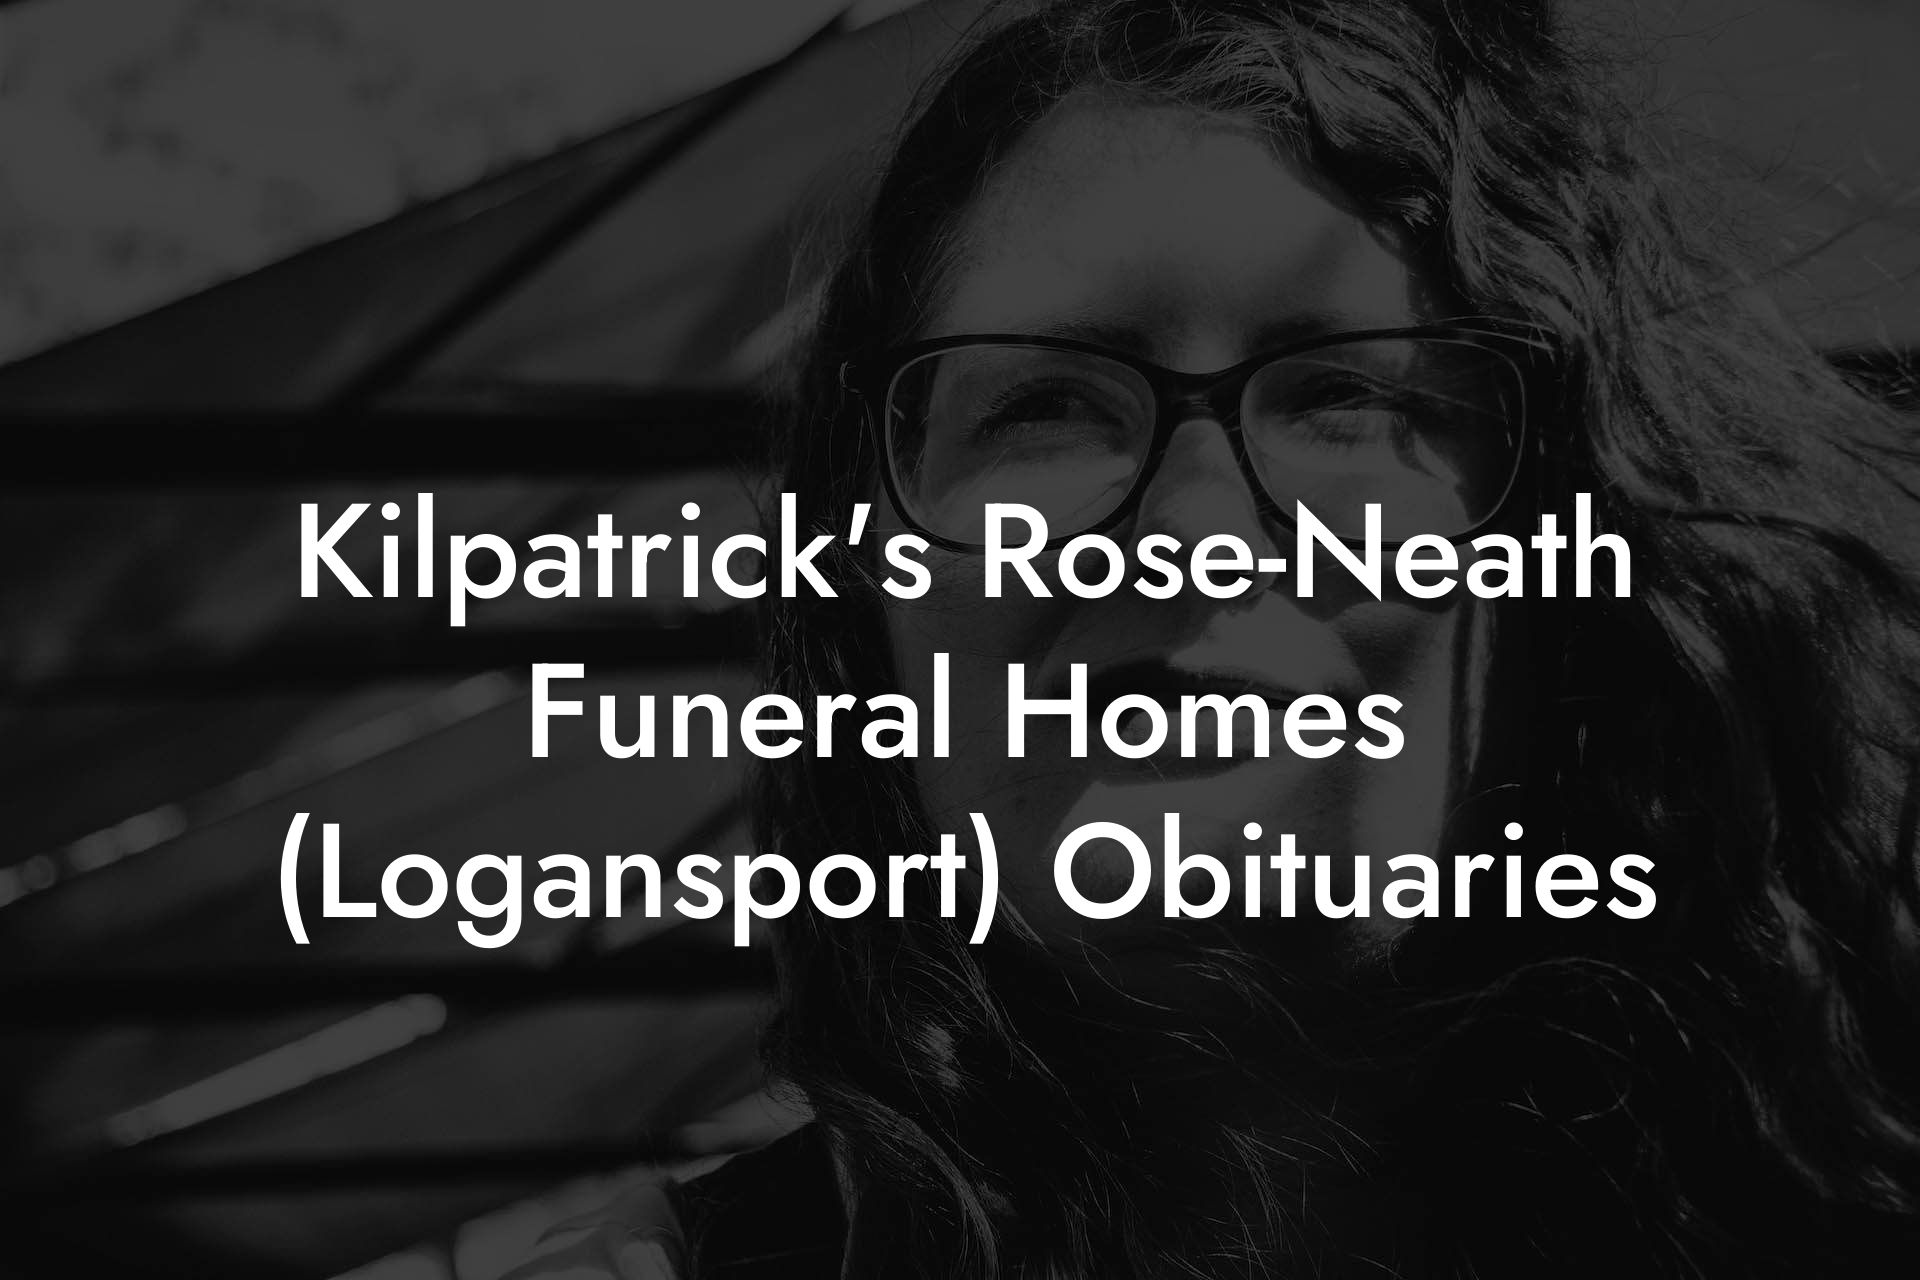 Kilpatrick's Rose-Neath Funeral Homes (Logansport) Obituaries